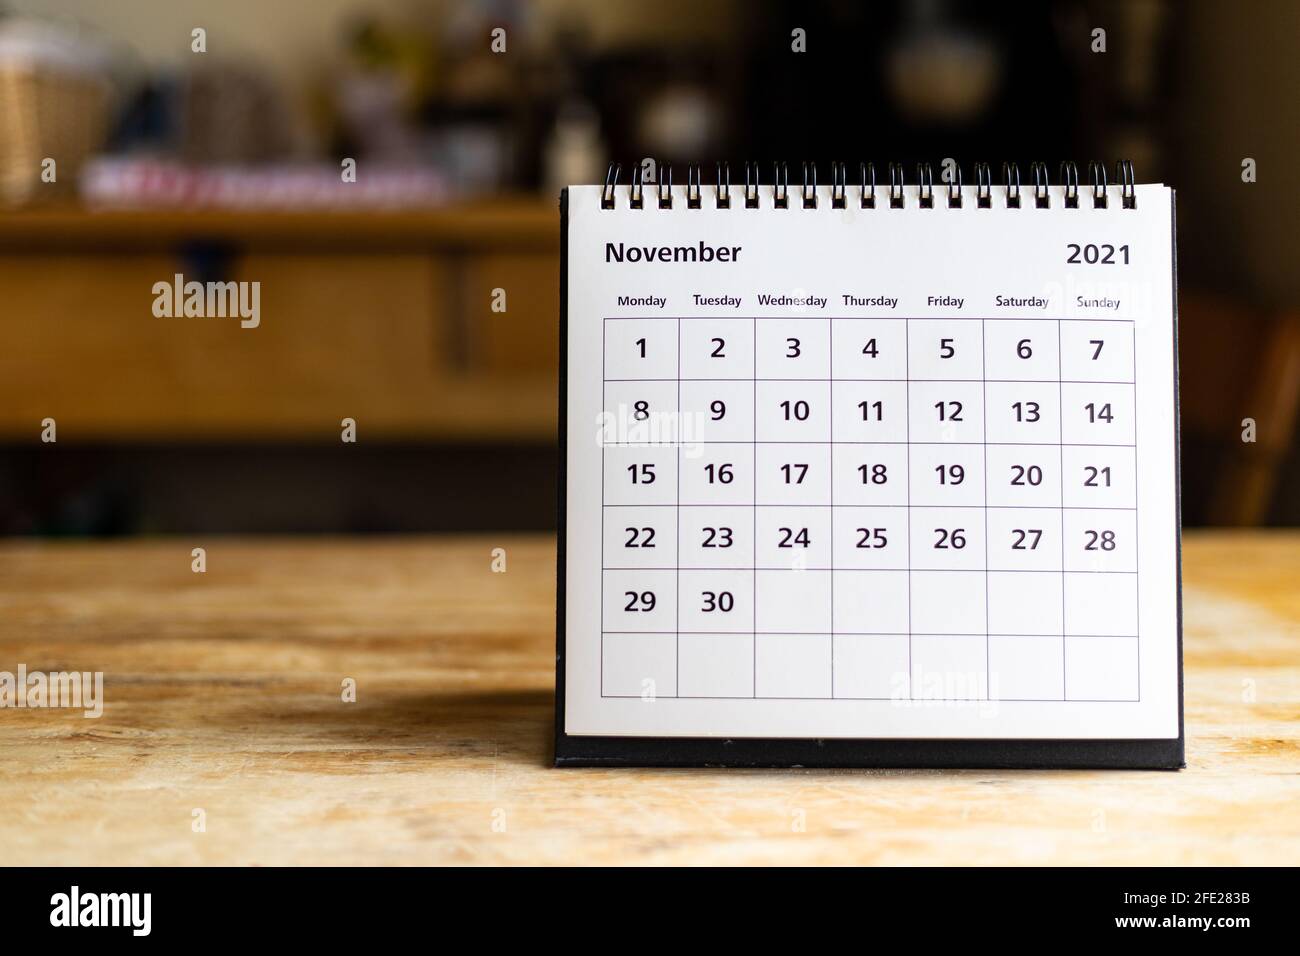 November 2021 Kalender - Monatsseite mit Datum auf Holz Tabelle Stockfoto